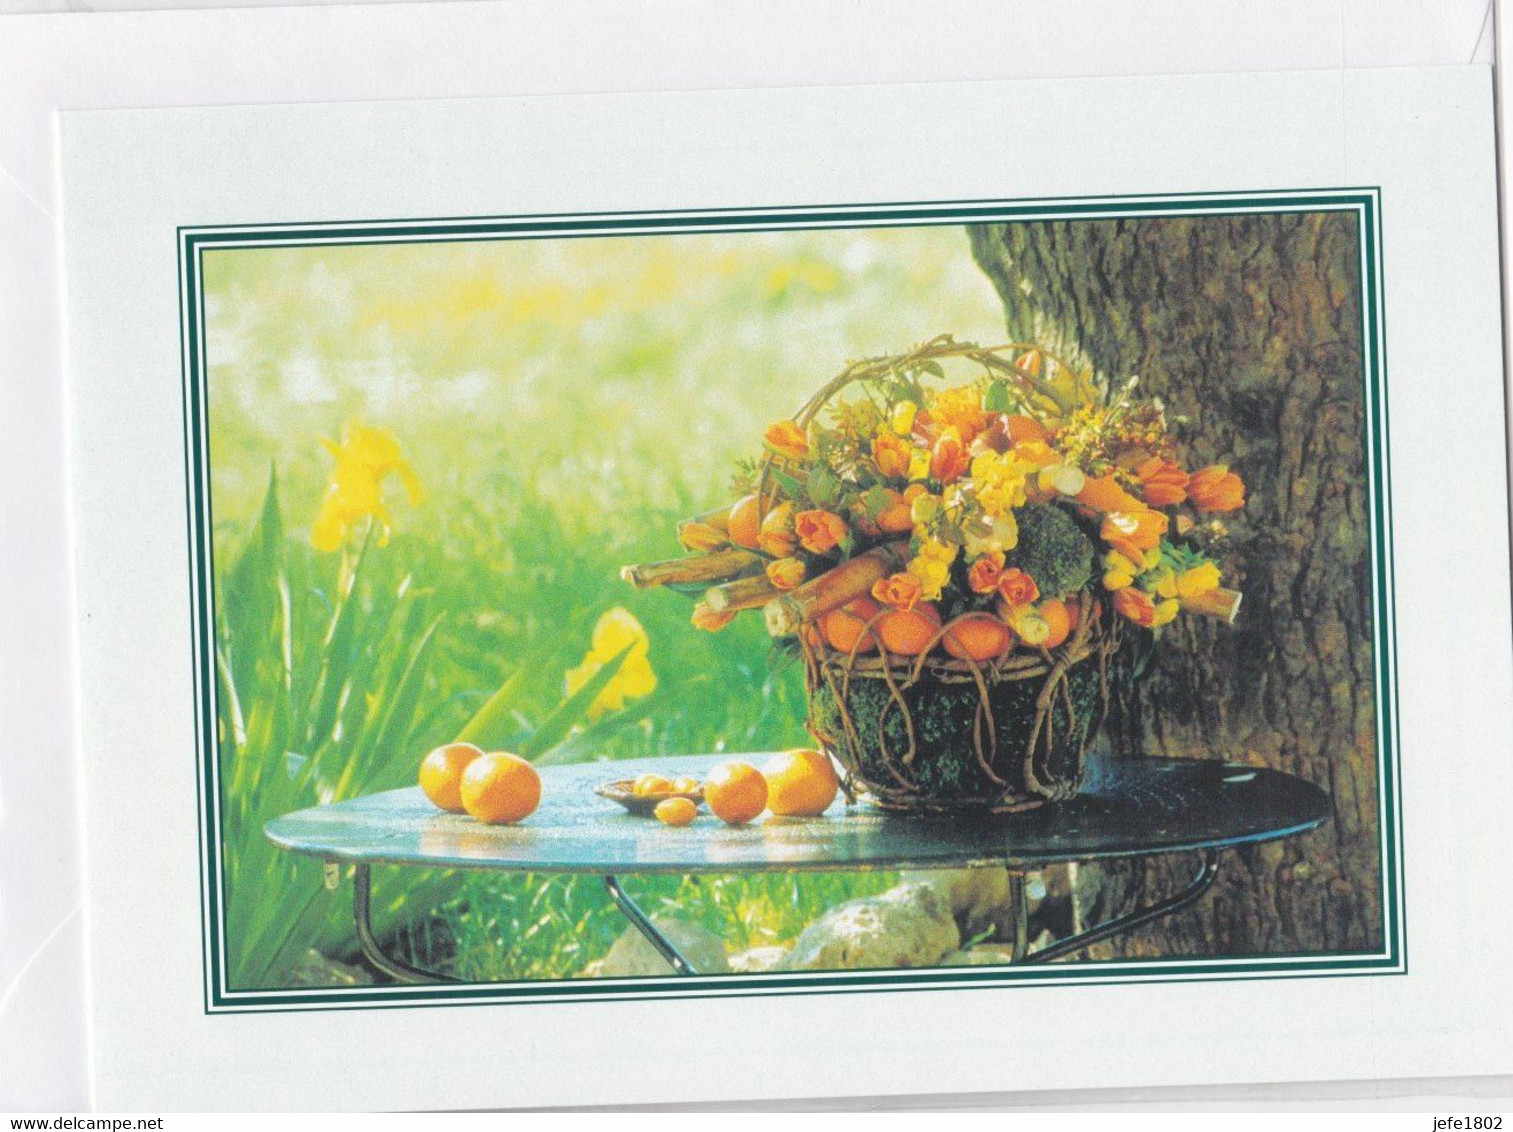 Postogram 122 / 97 - Fruitkorf - Fotostock - Flowers - Fruit - Basket - Postogram